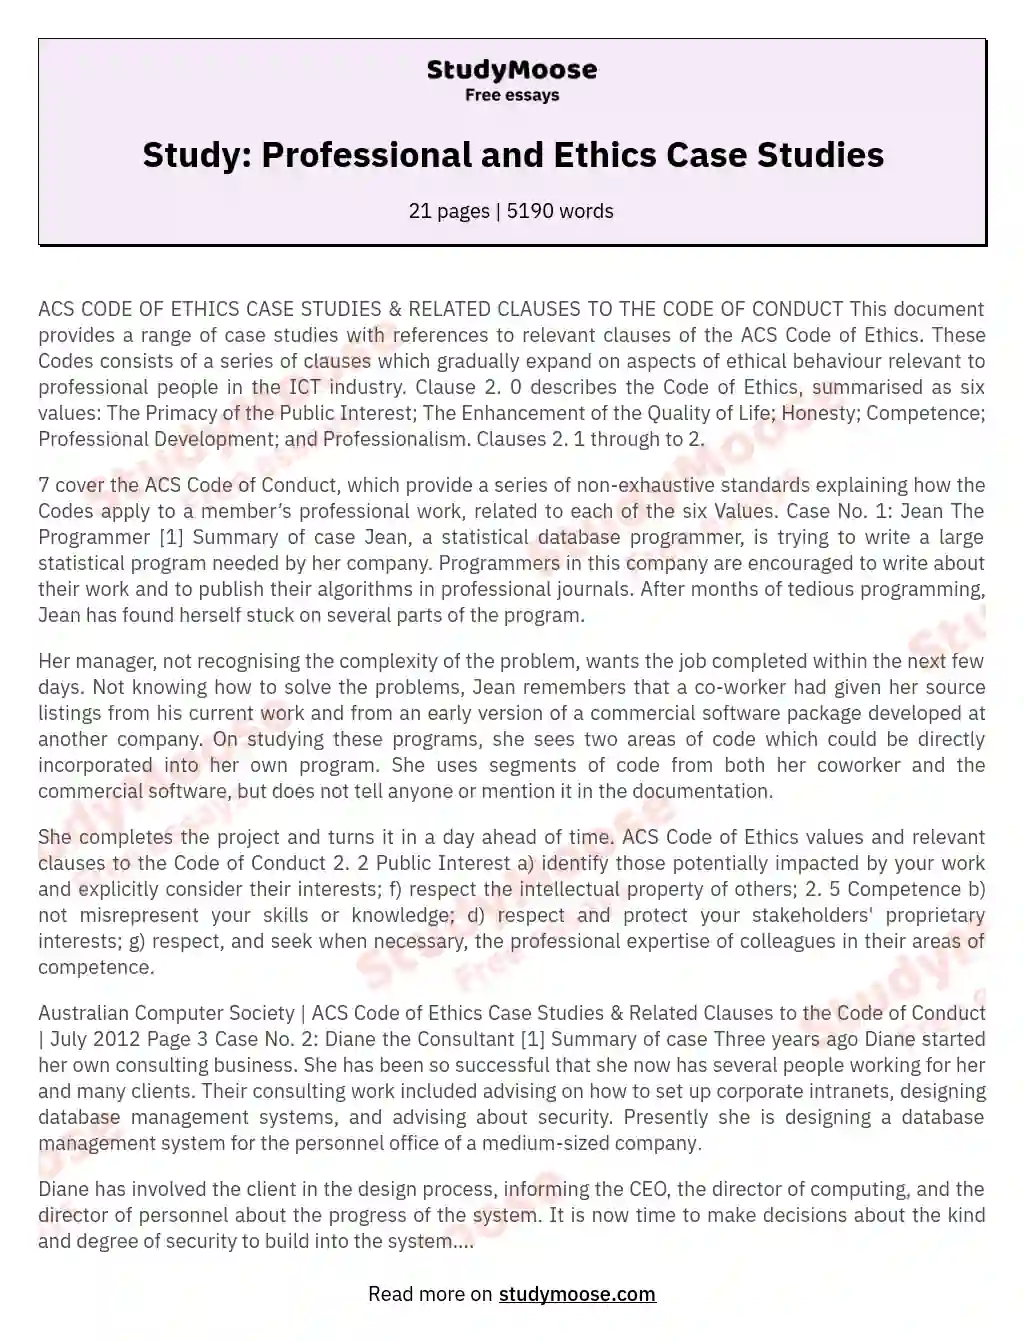 Study: Professional and Ethics Case Studies essay